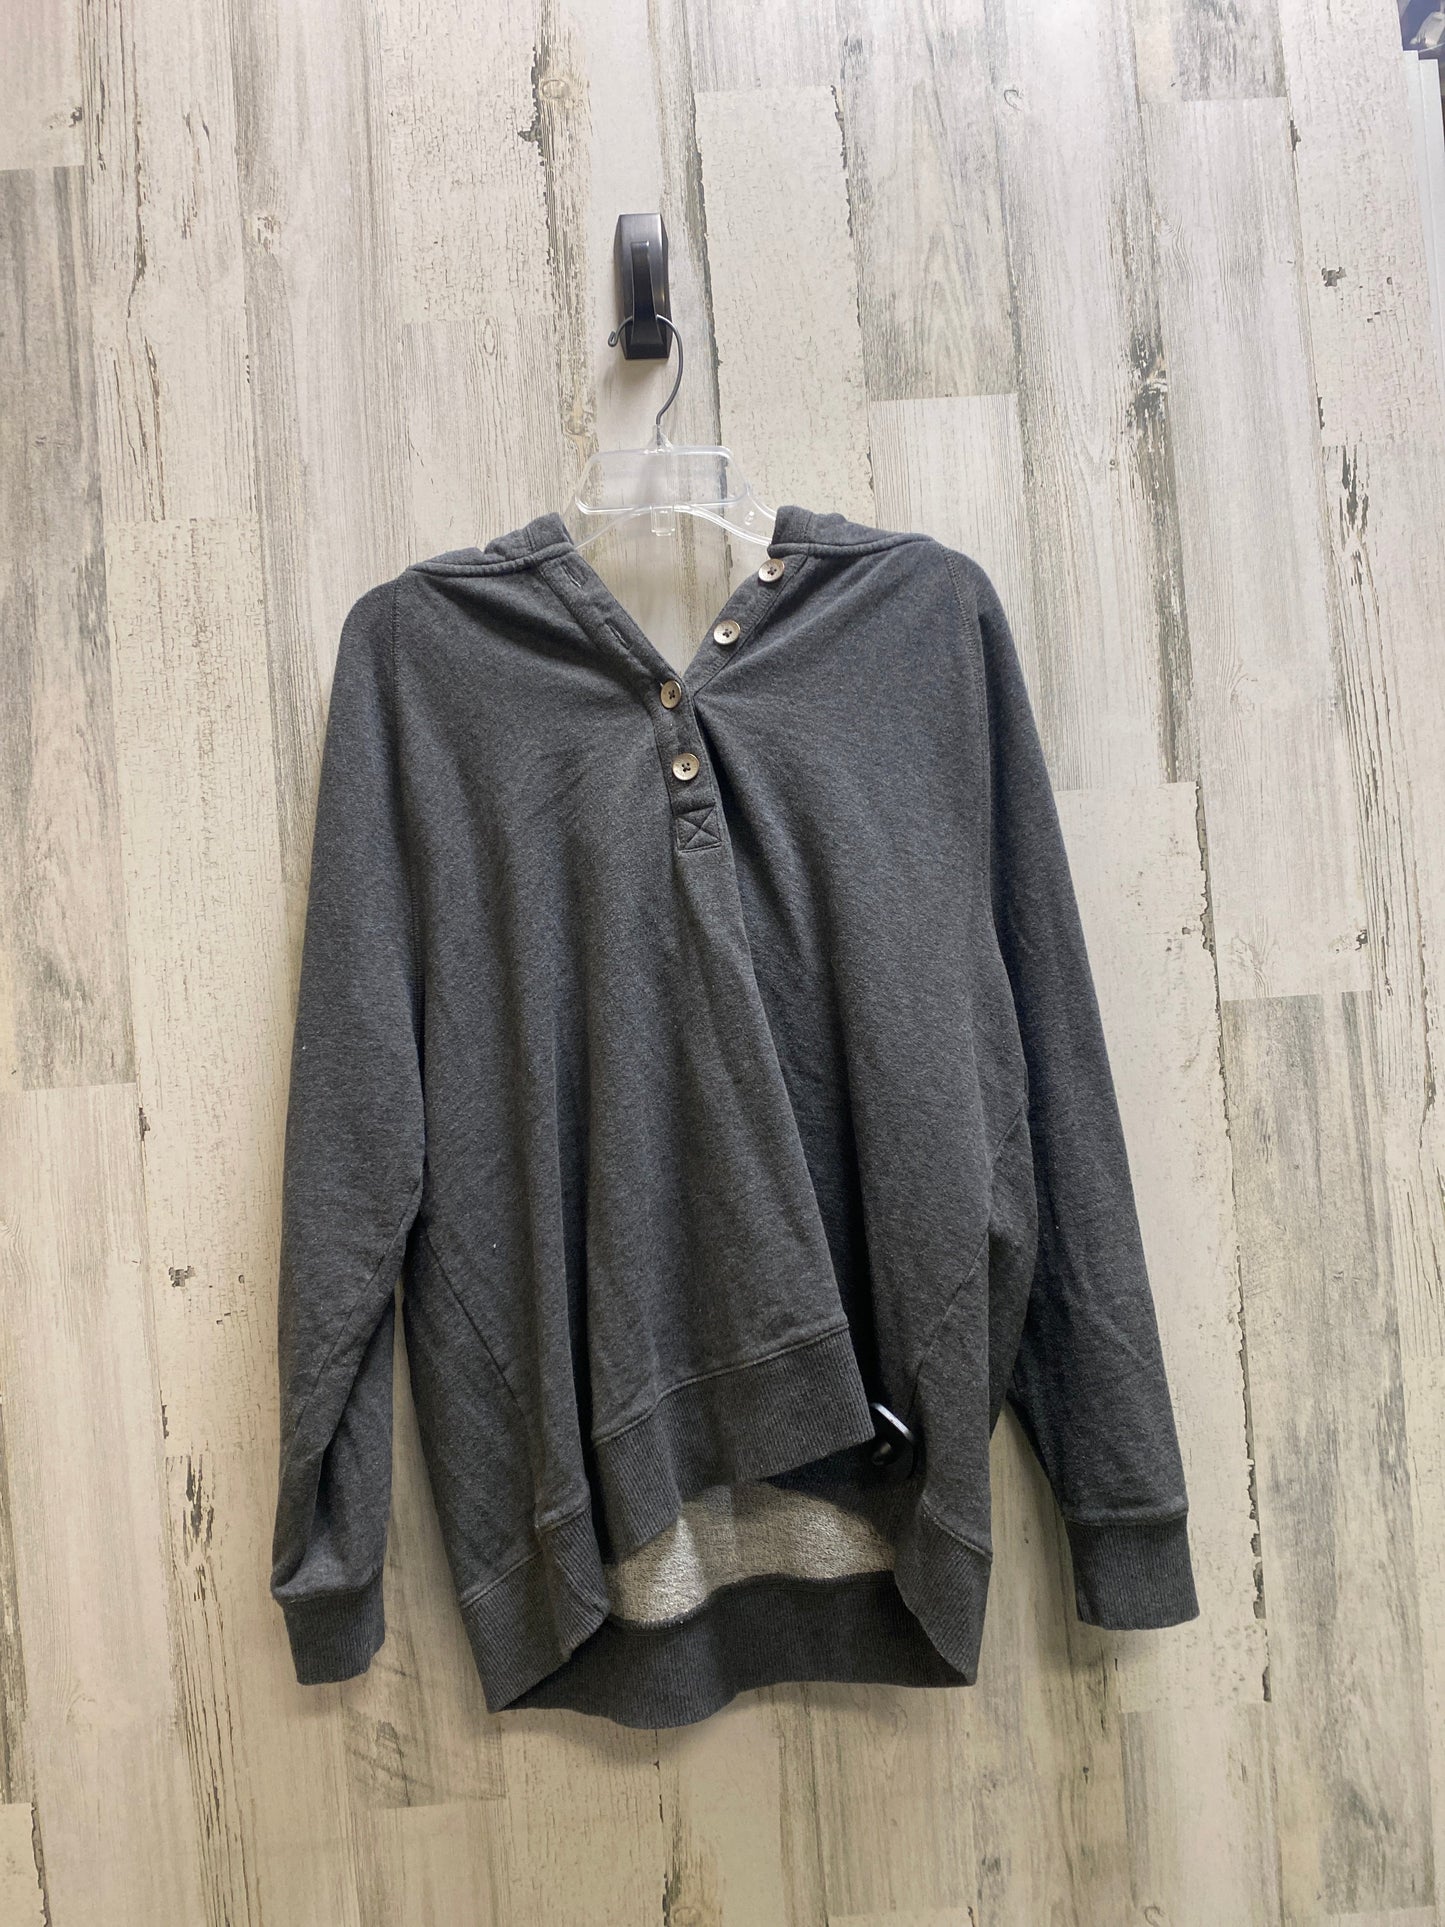 Sweatshirt Hoodie By Sonoma  Size: 1x